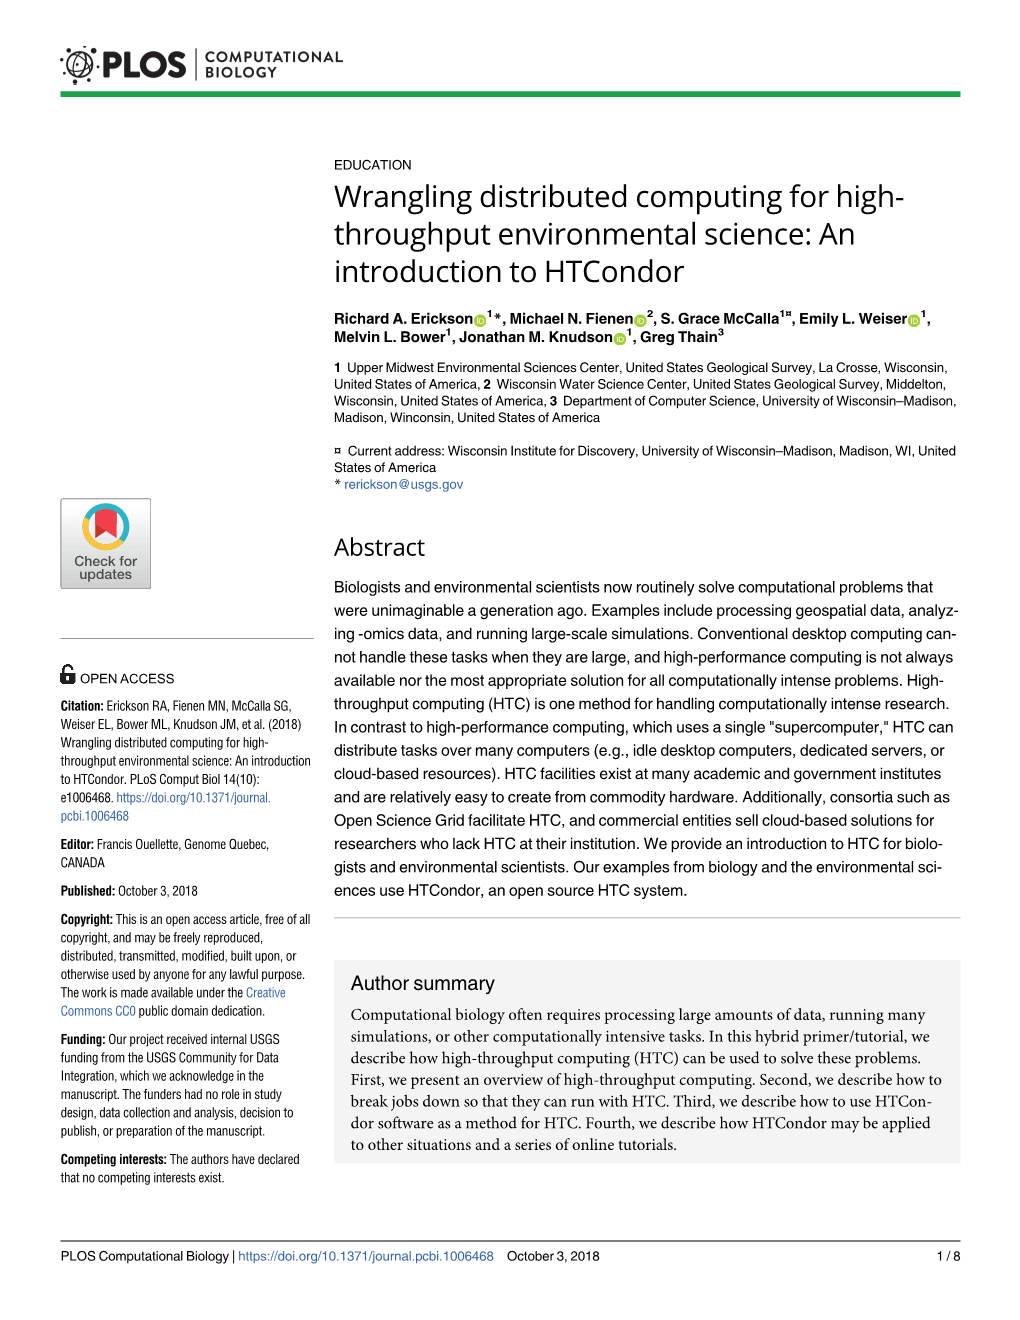 Wrangling Distributed Computing for High-Throughput Environmental